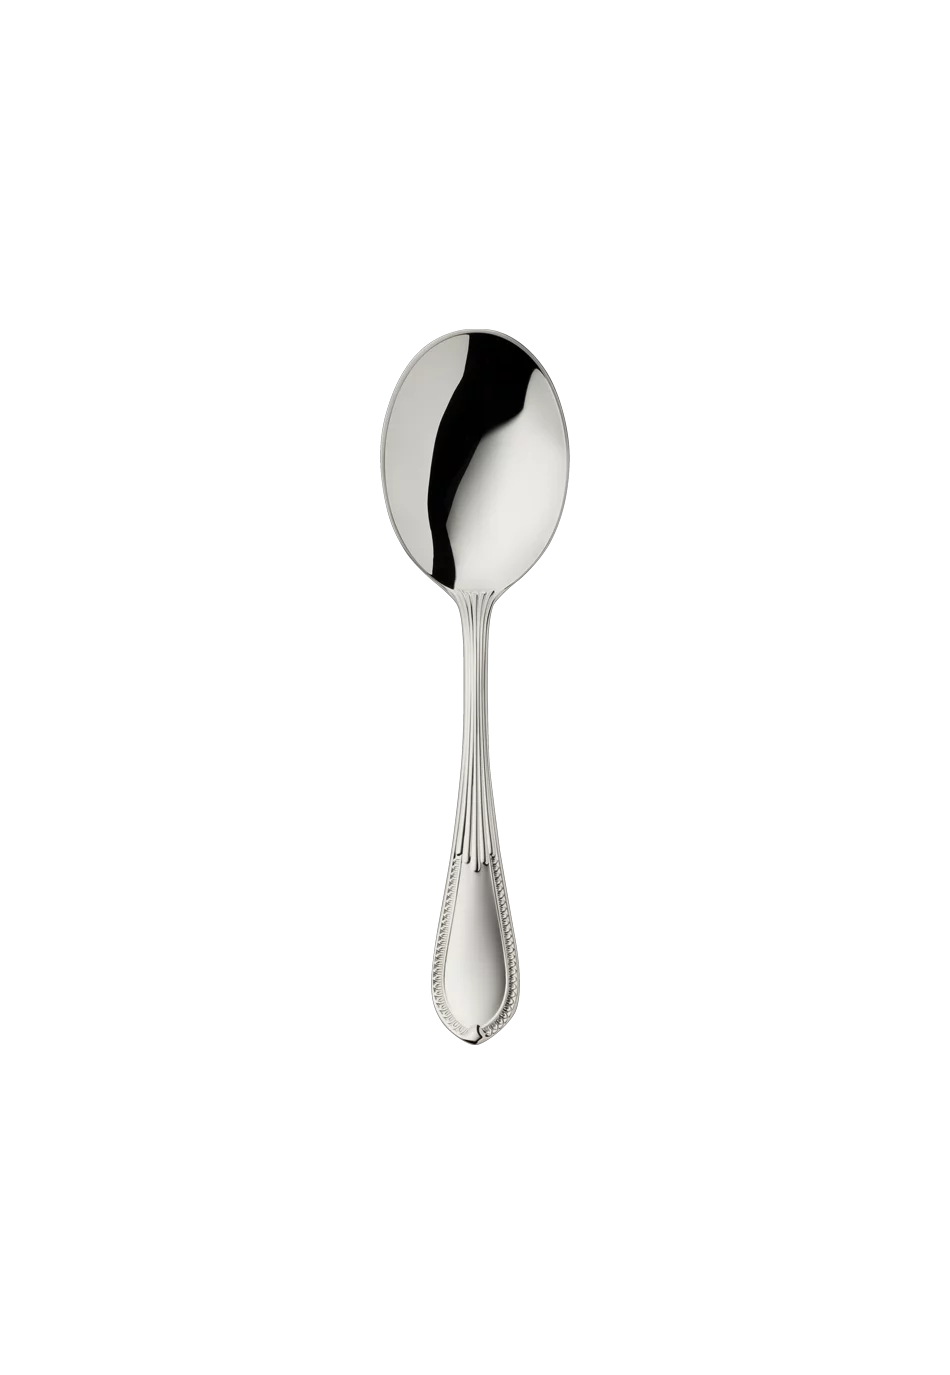 Belvedere Cream Spoon (Broth Spoon) (150g massive silverplated)